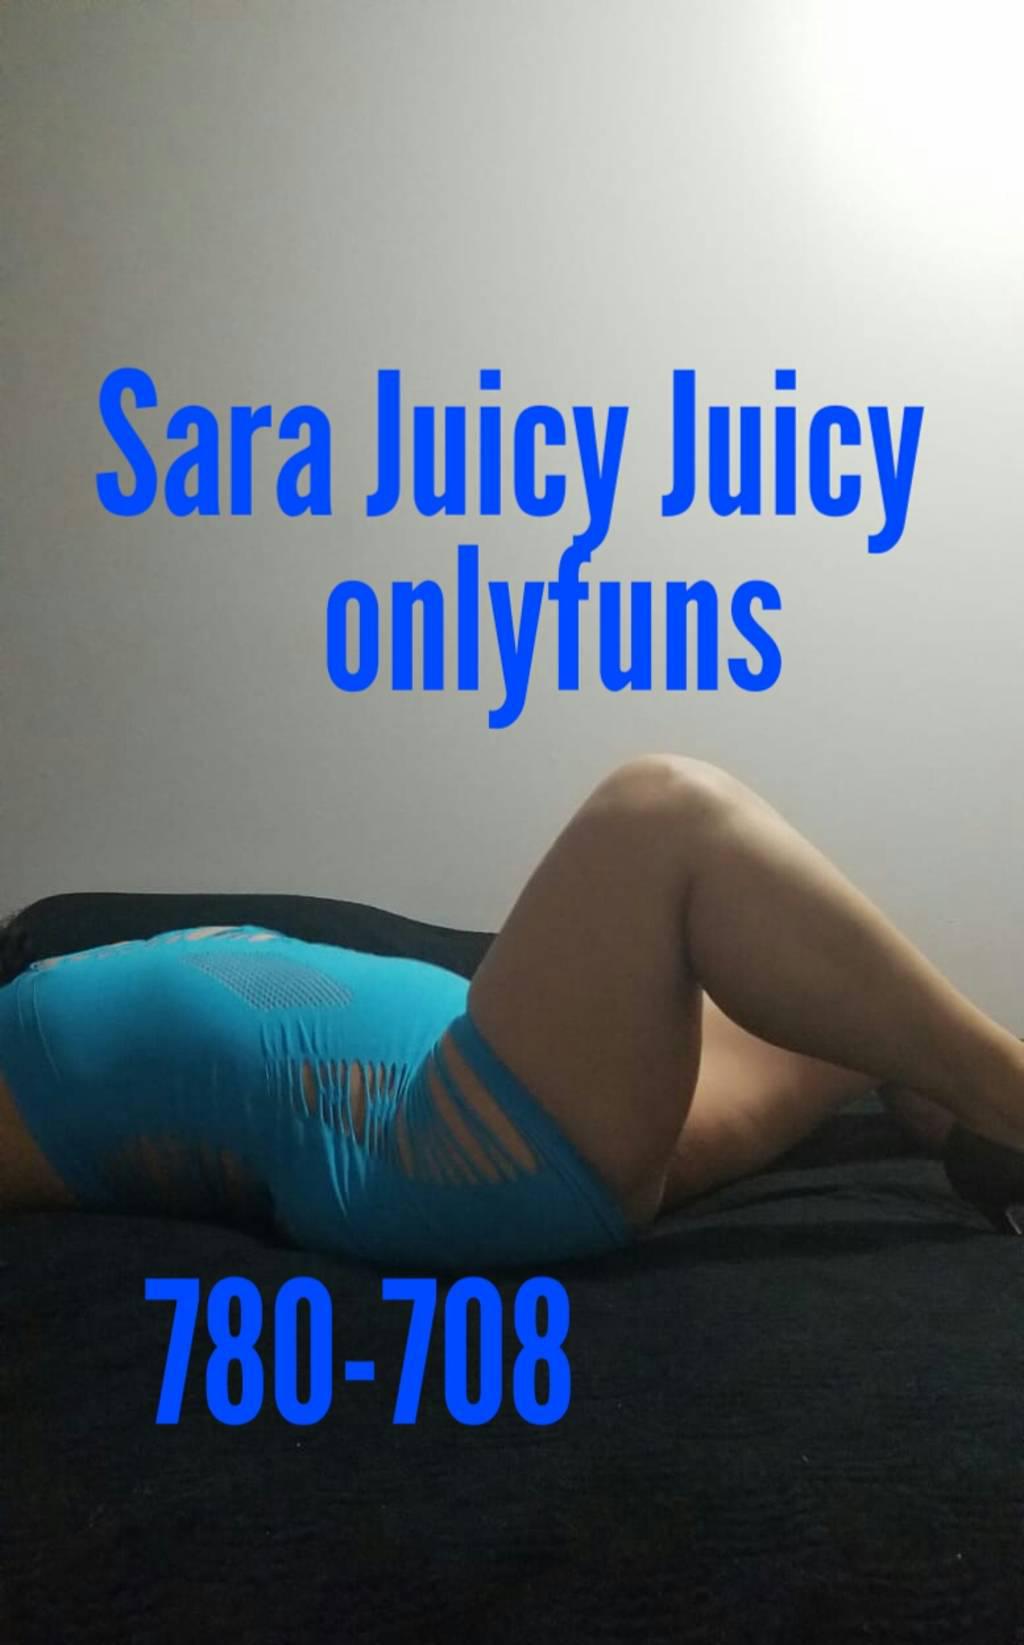 SARA JUICY JUICY LATINA online fun small BBW